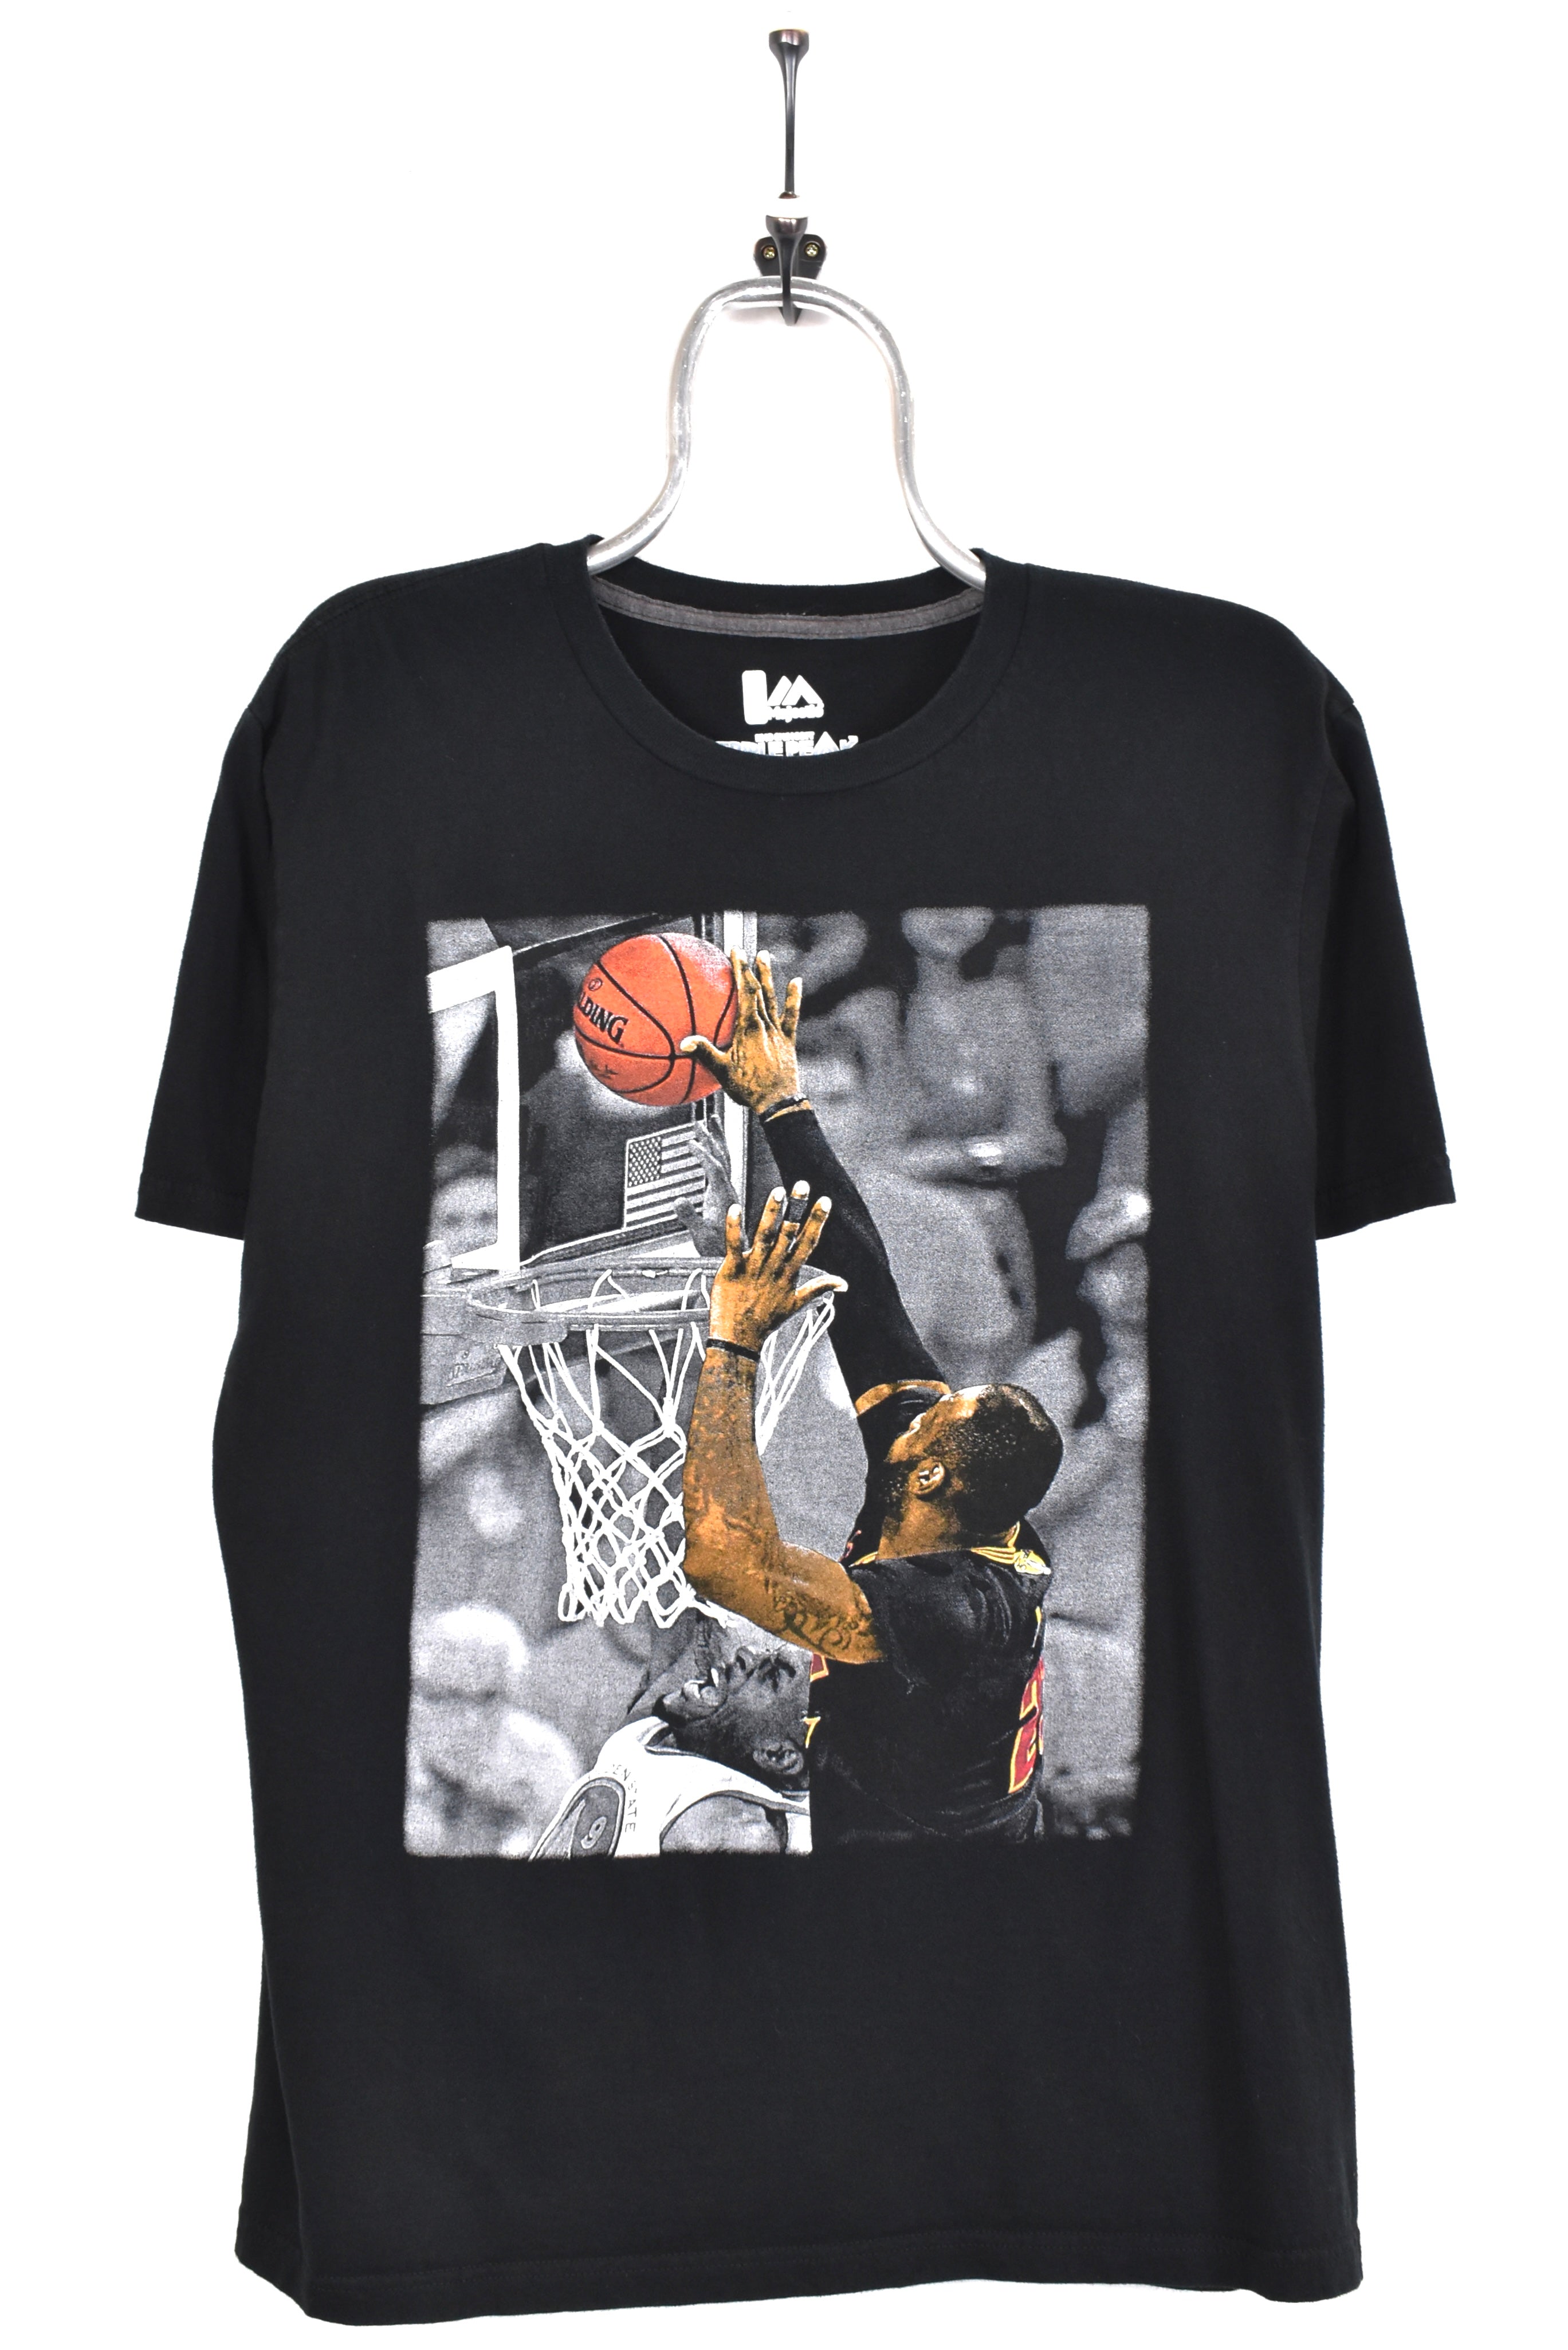 Modern NBA shirt, black graphic tee - AU Large PRO SPORT